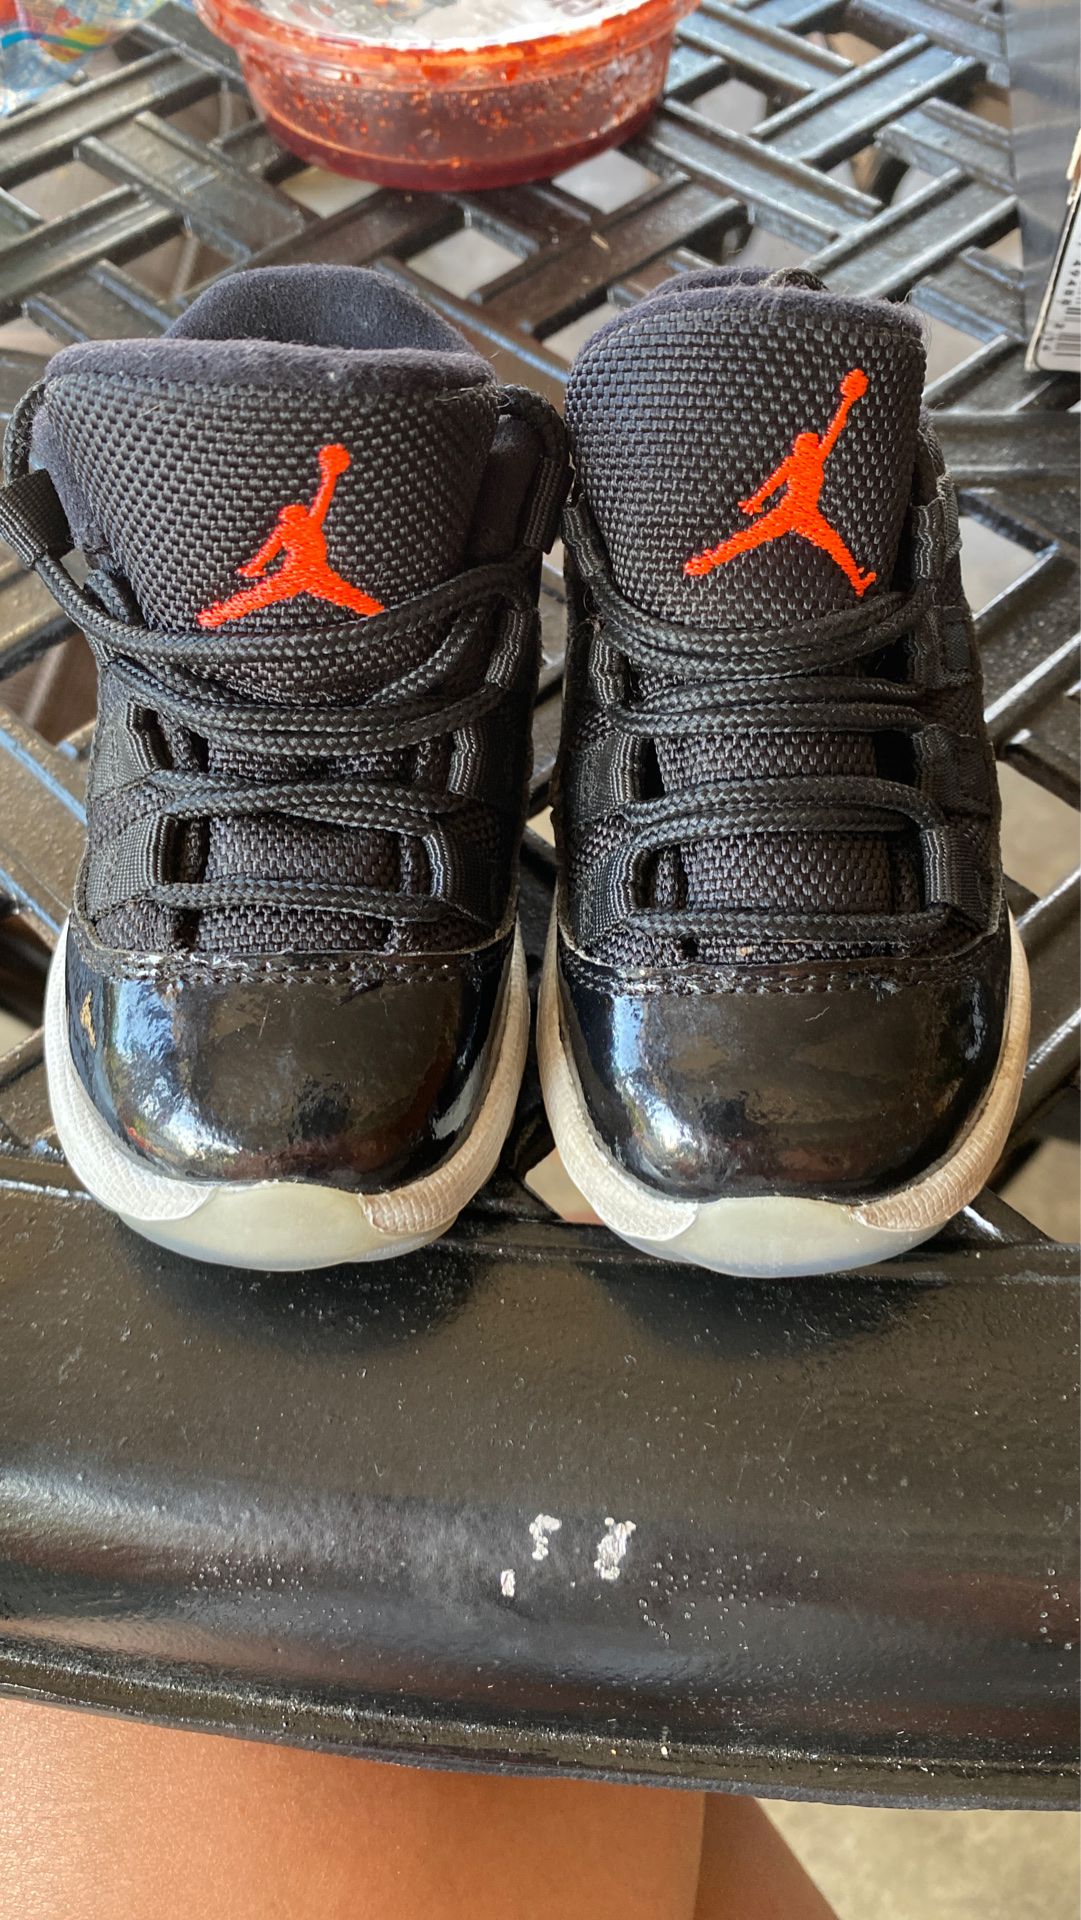 Nike Air Jordan 11 Retro Low Infrared 23 size 5C